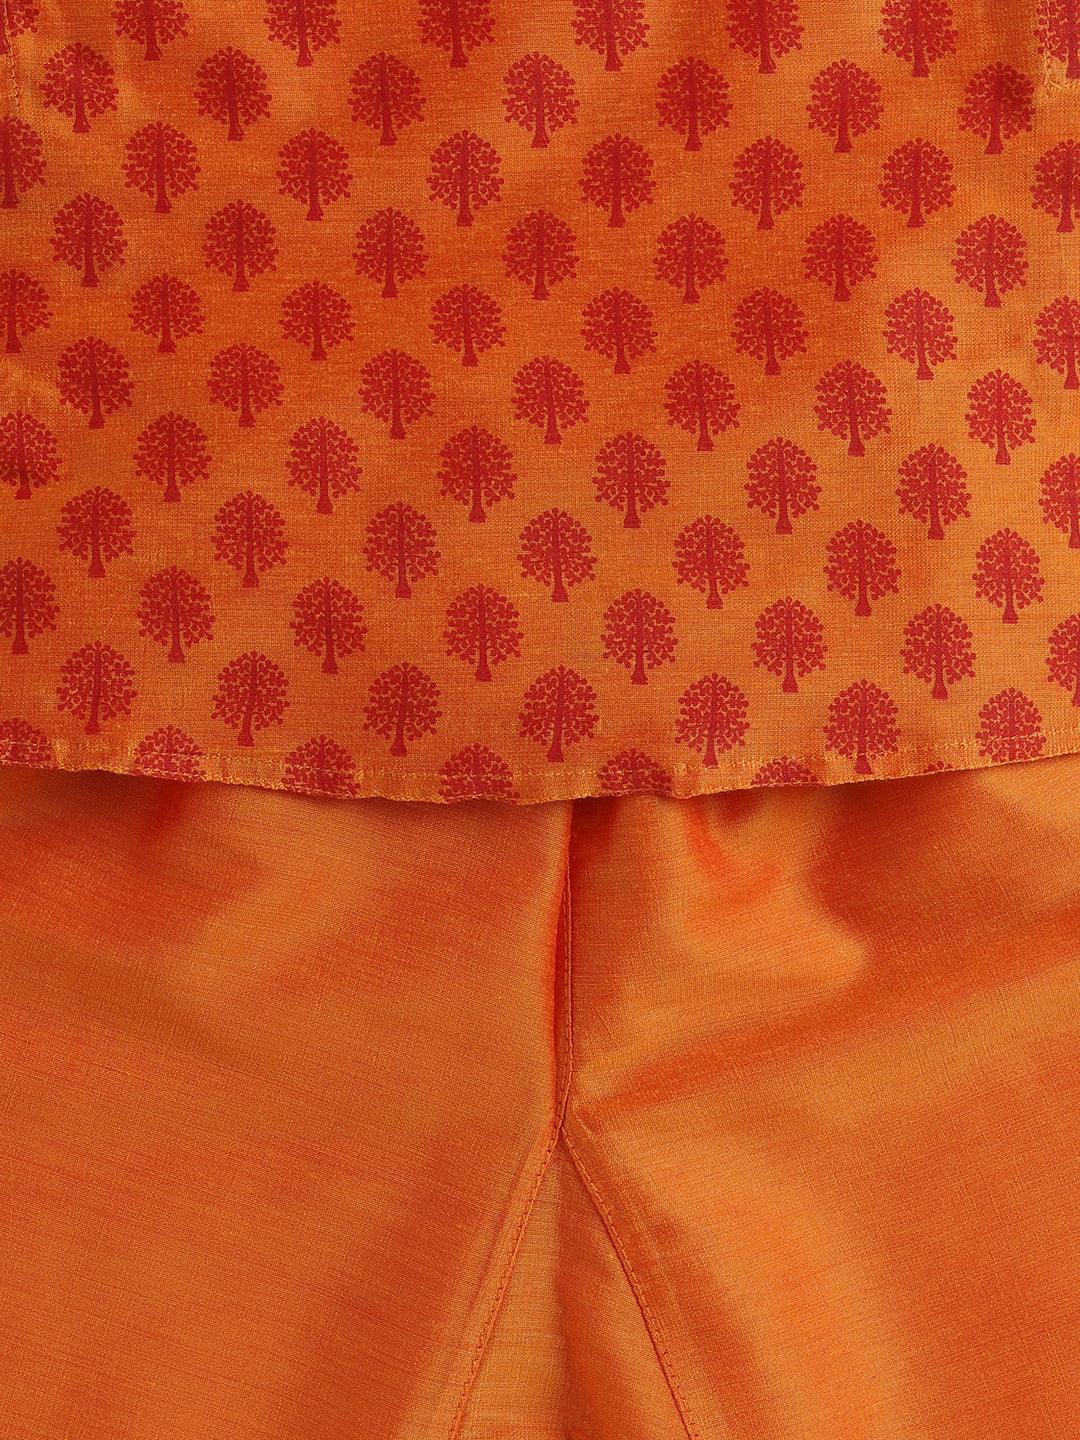 VASTRAMAY SISHU Boys Orange Cotton Blend Kurta Pyjama Set - Uboric